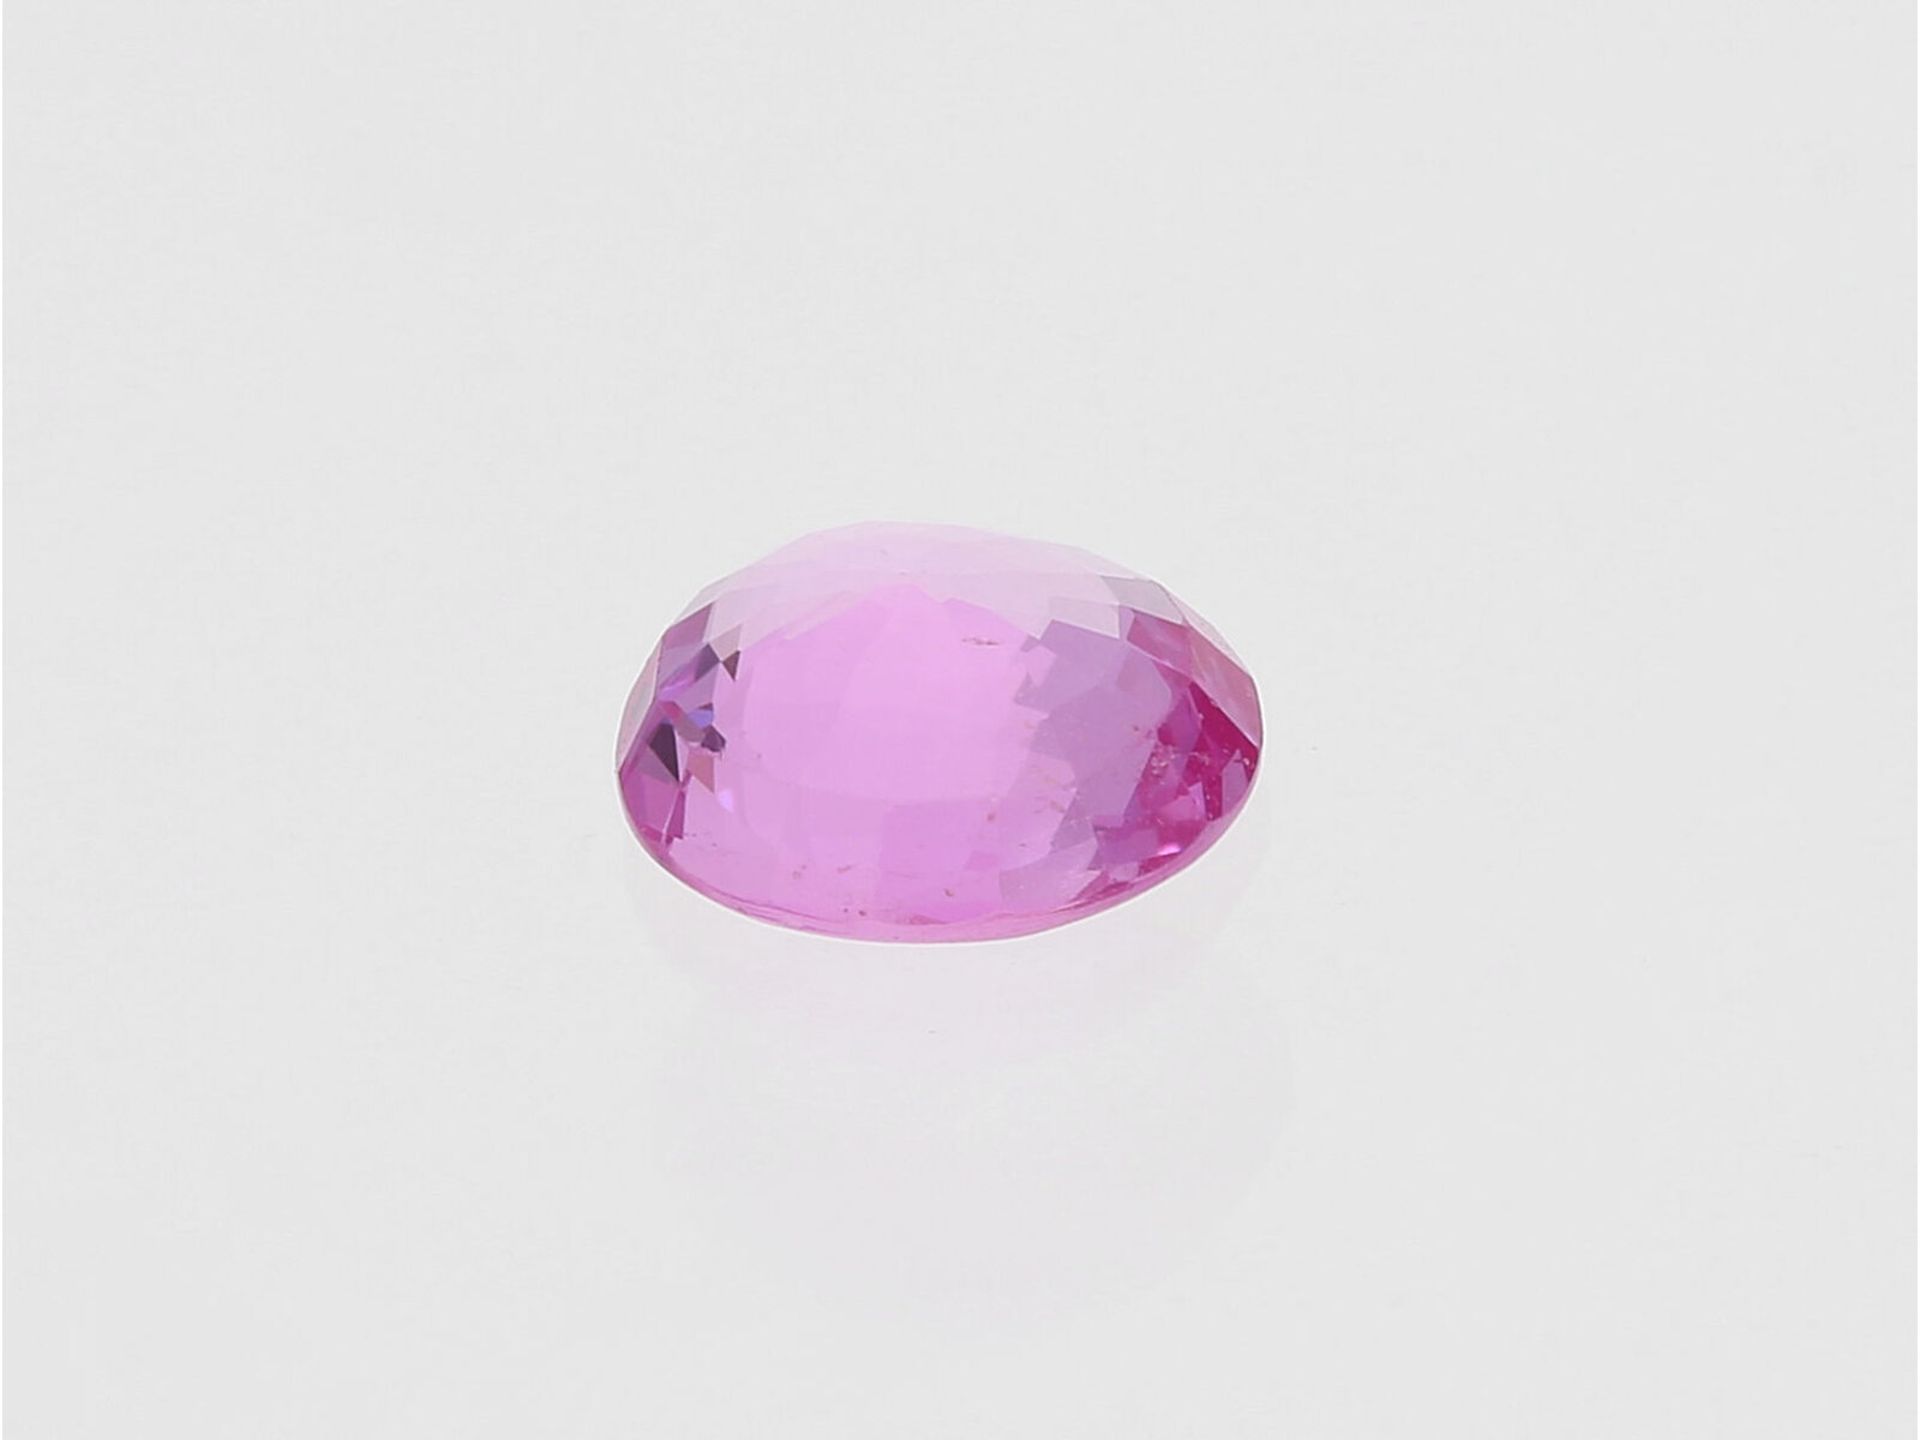 Saphir: feiner pinkfarbener Saphir , ca. 1,26ct: Ca. Ø6,9mm, ca. 2,8mm hoch, ca. 1,26ct, runde Form, - Image 2 of 2